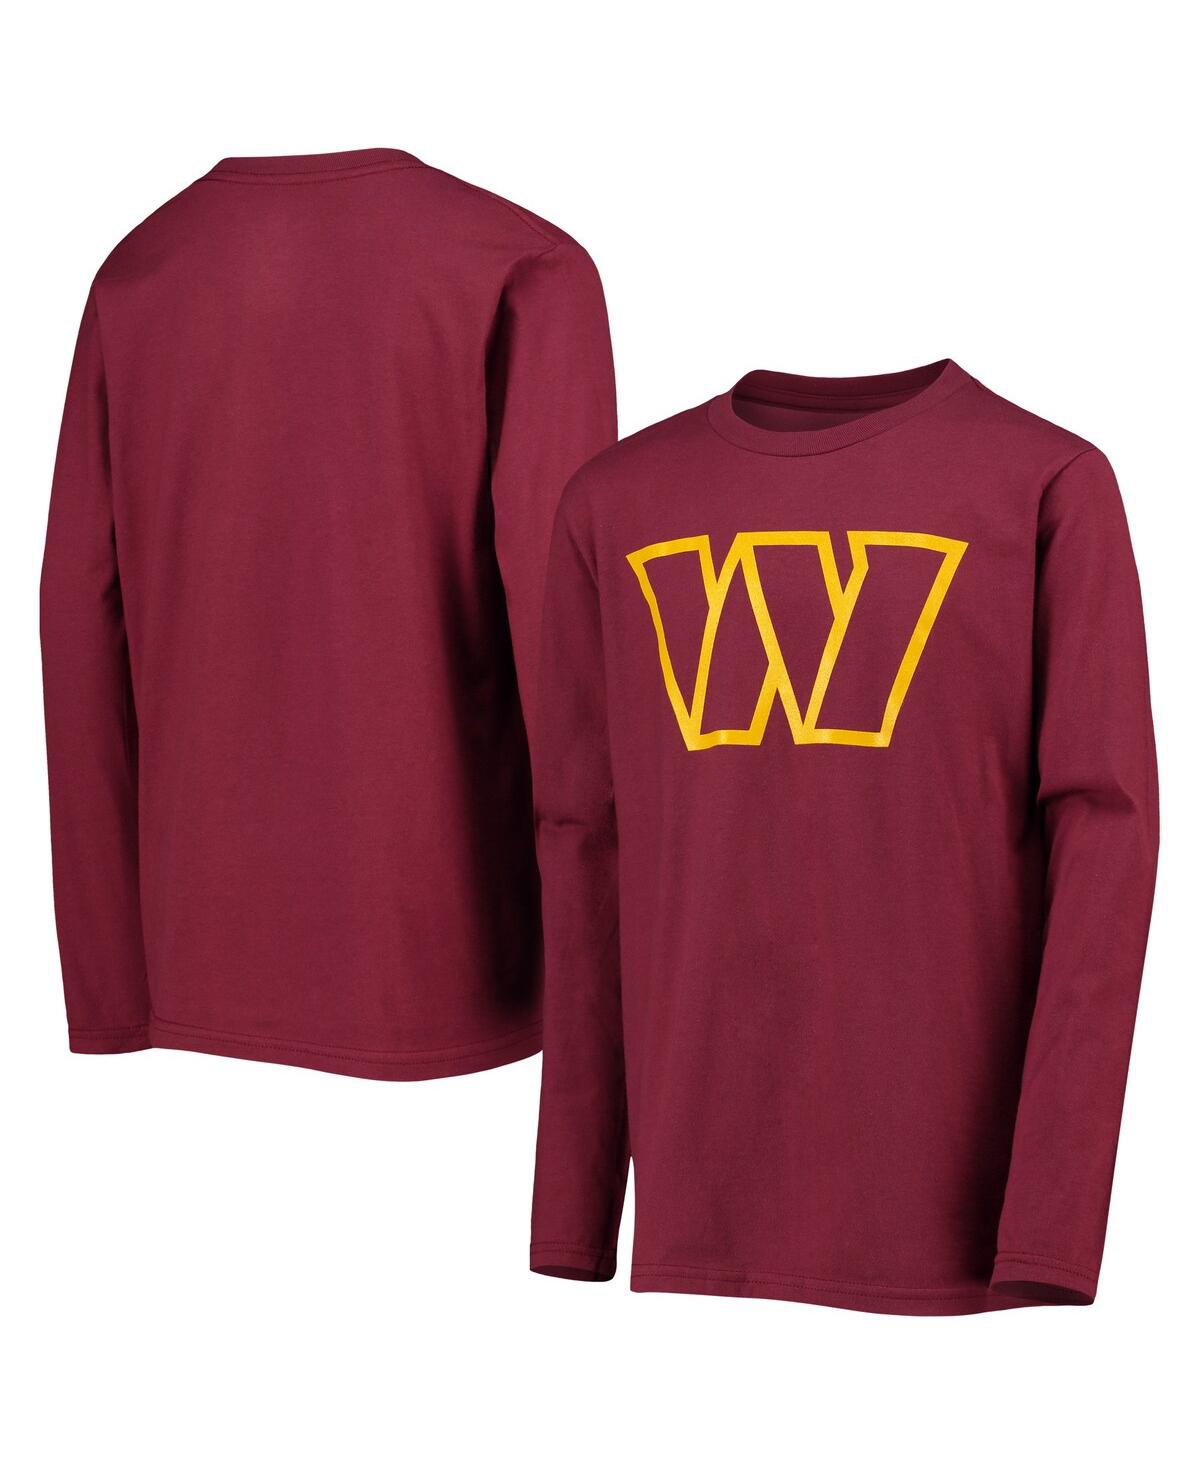 Shop Outerstuff Big Boys Burgundy Washington Commanders Primary Team Logo Long Sleeve T-shirt